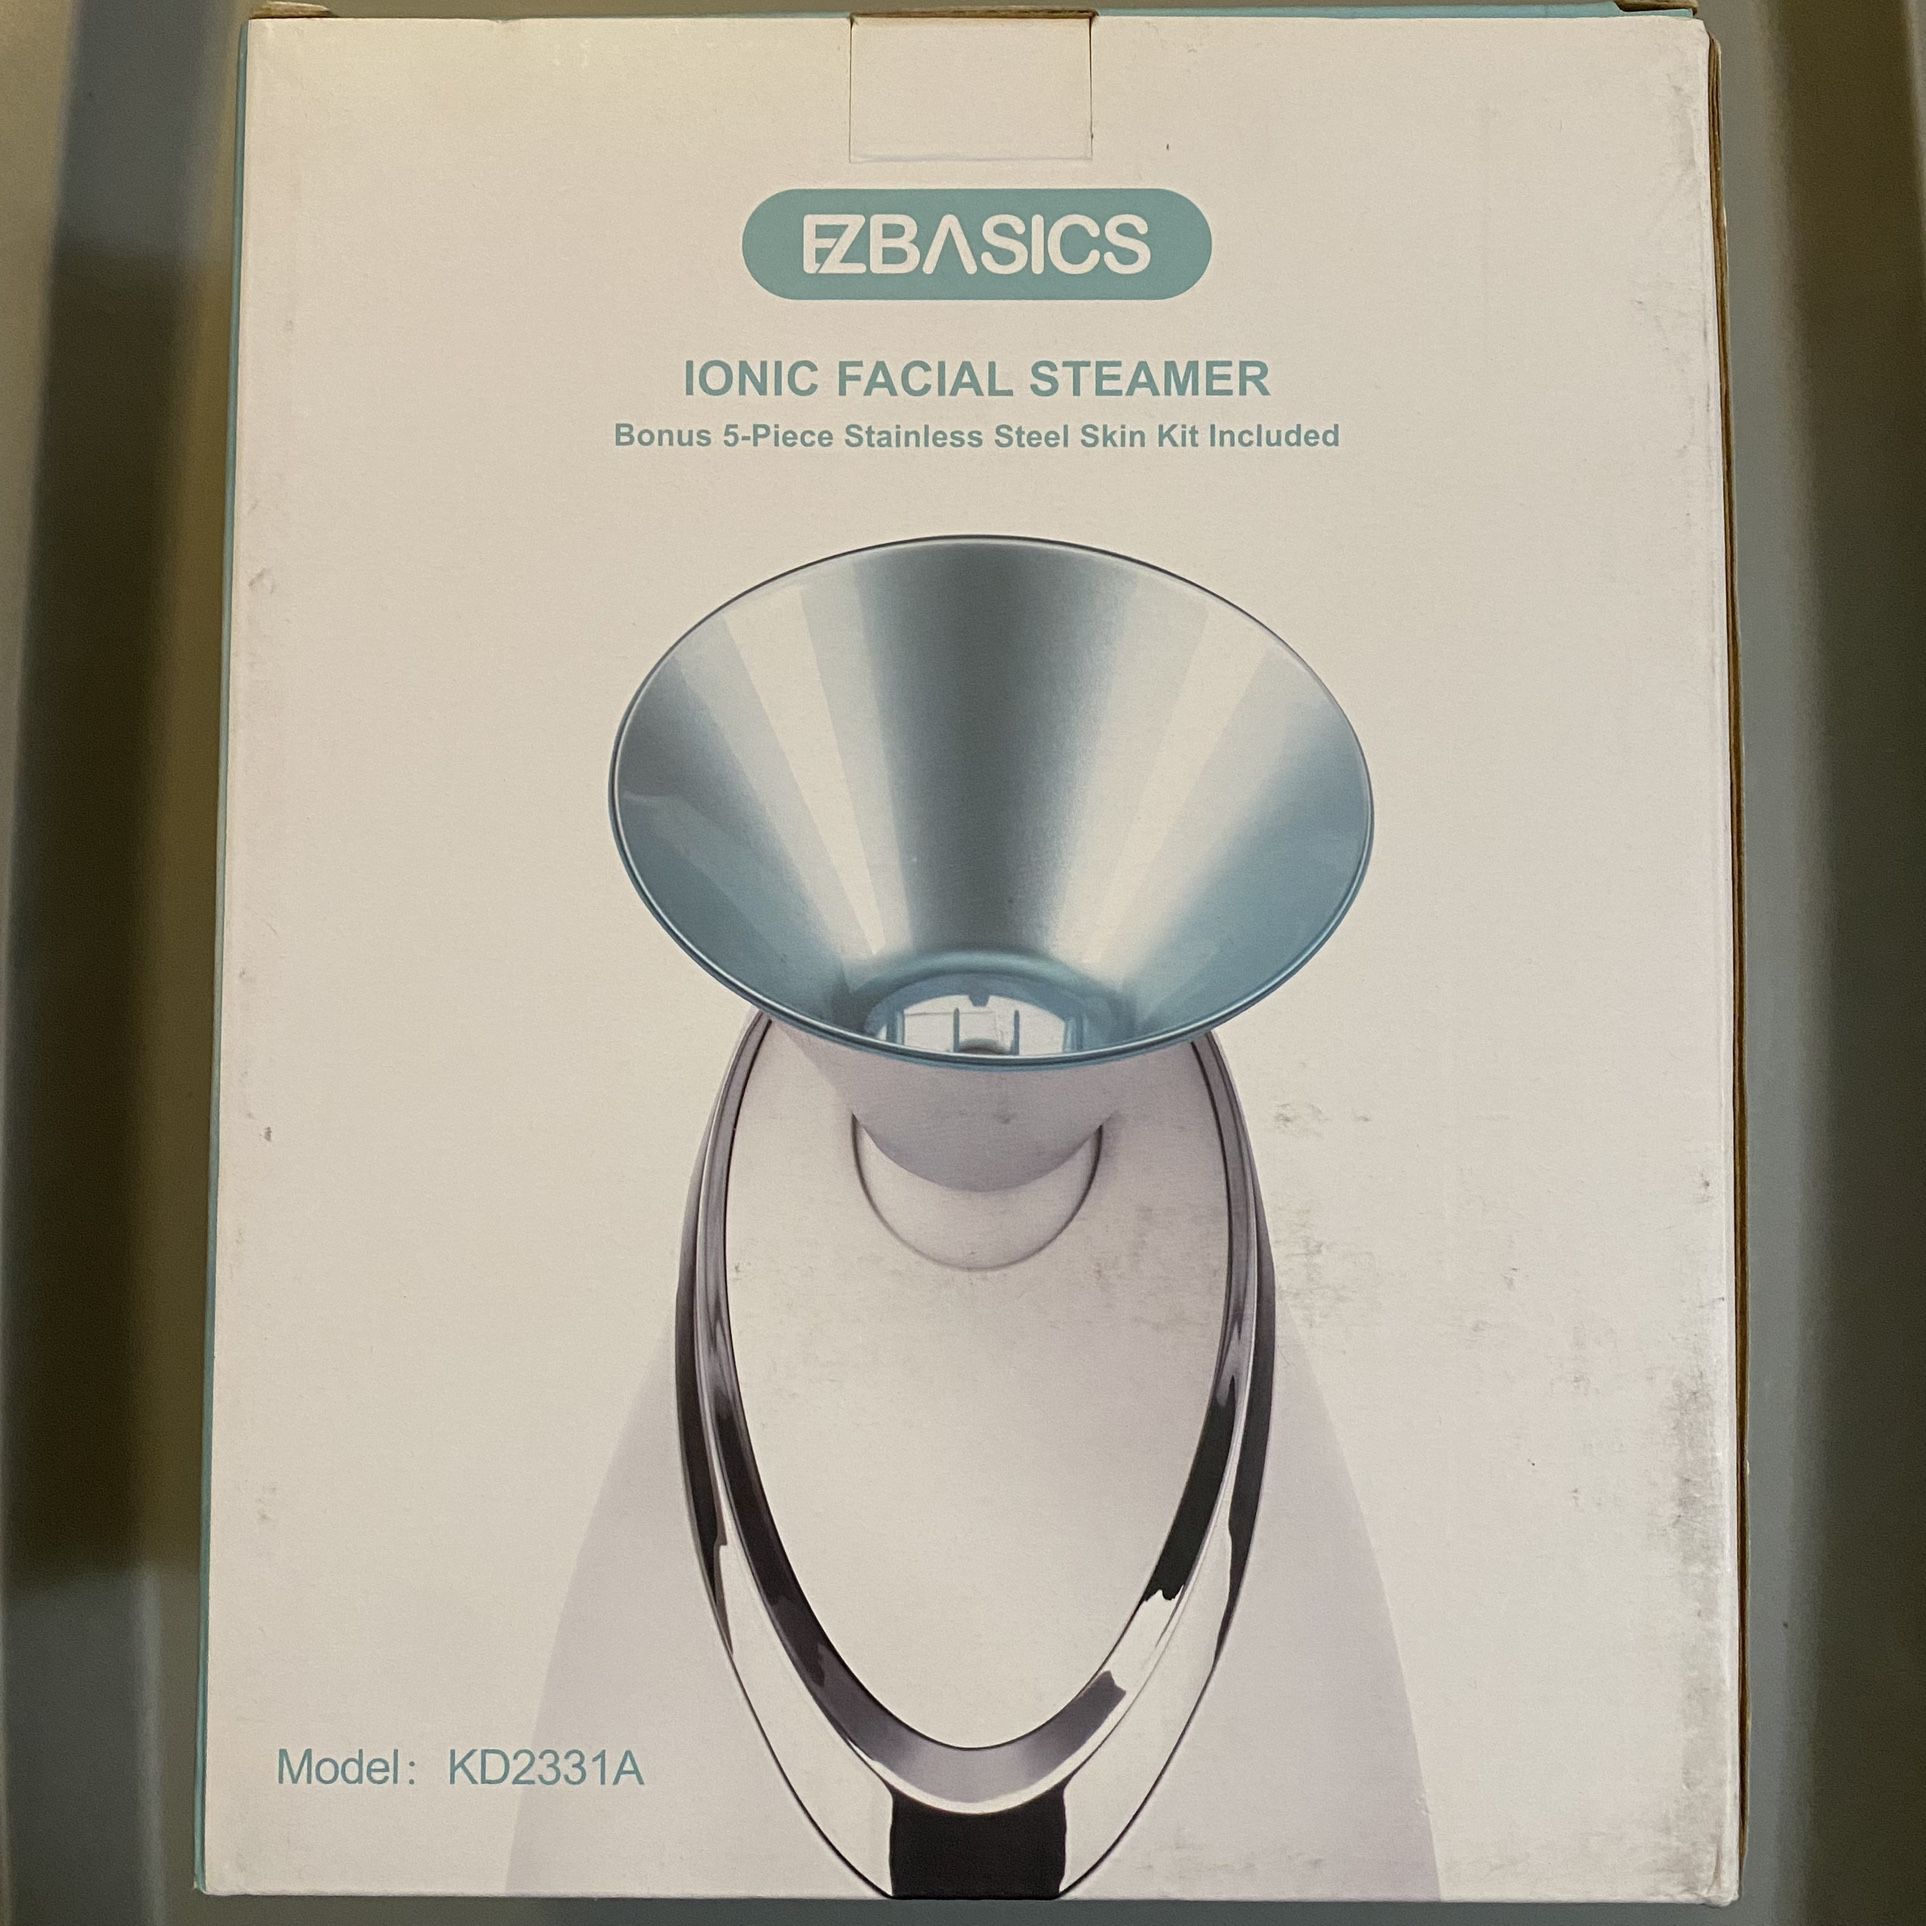 EZBASICS Ionic Facial Steamer Bonus 5-Piece Stainless Steel Skin Kit Included *Brand New